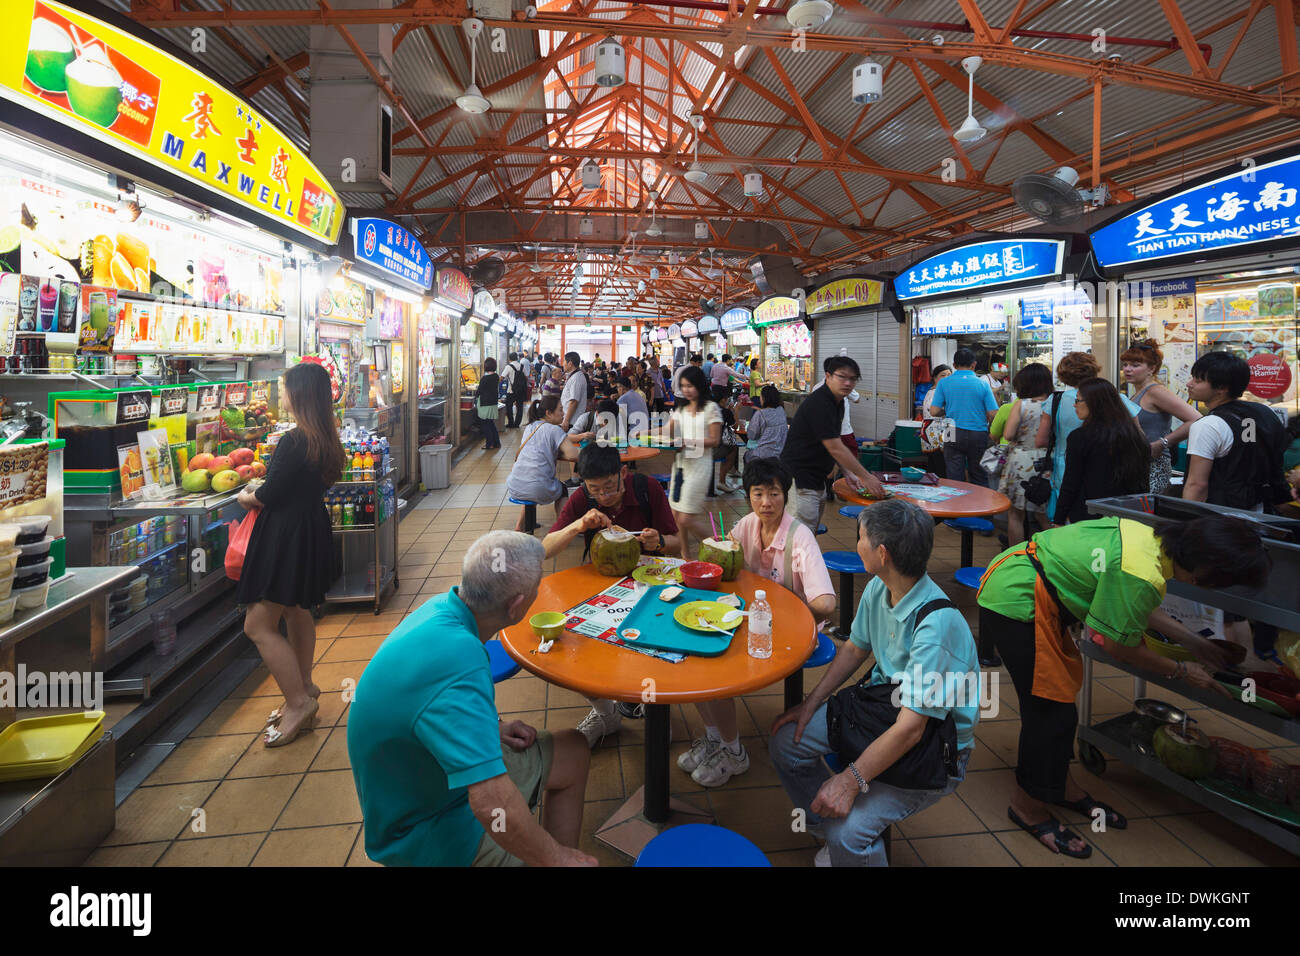 Hawker food court, Little India, Singapore, Southeast Asia, Asia Stock Photo